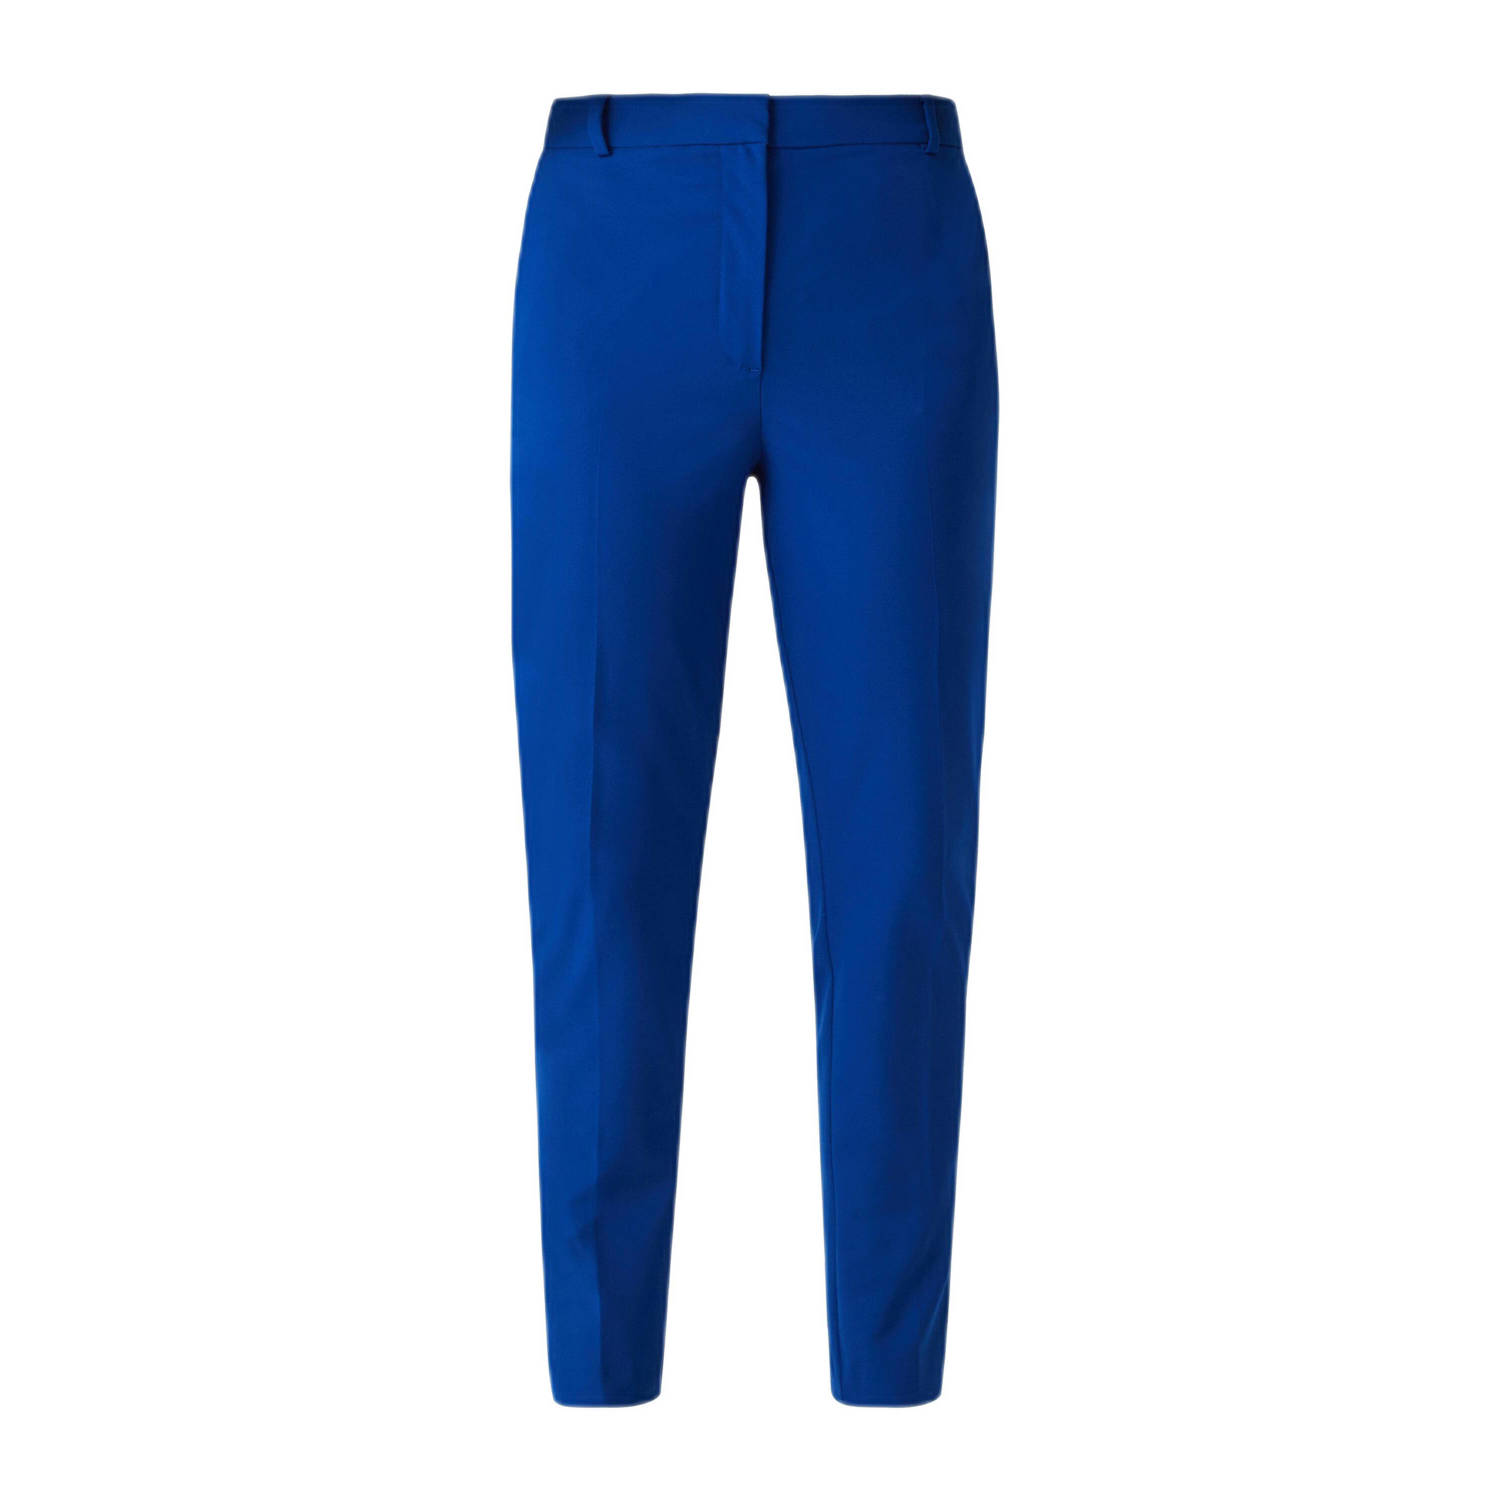 comma tapered fit pantalon blauw